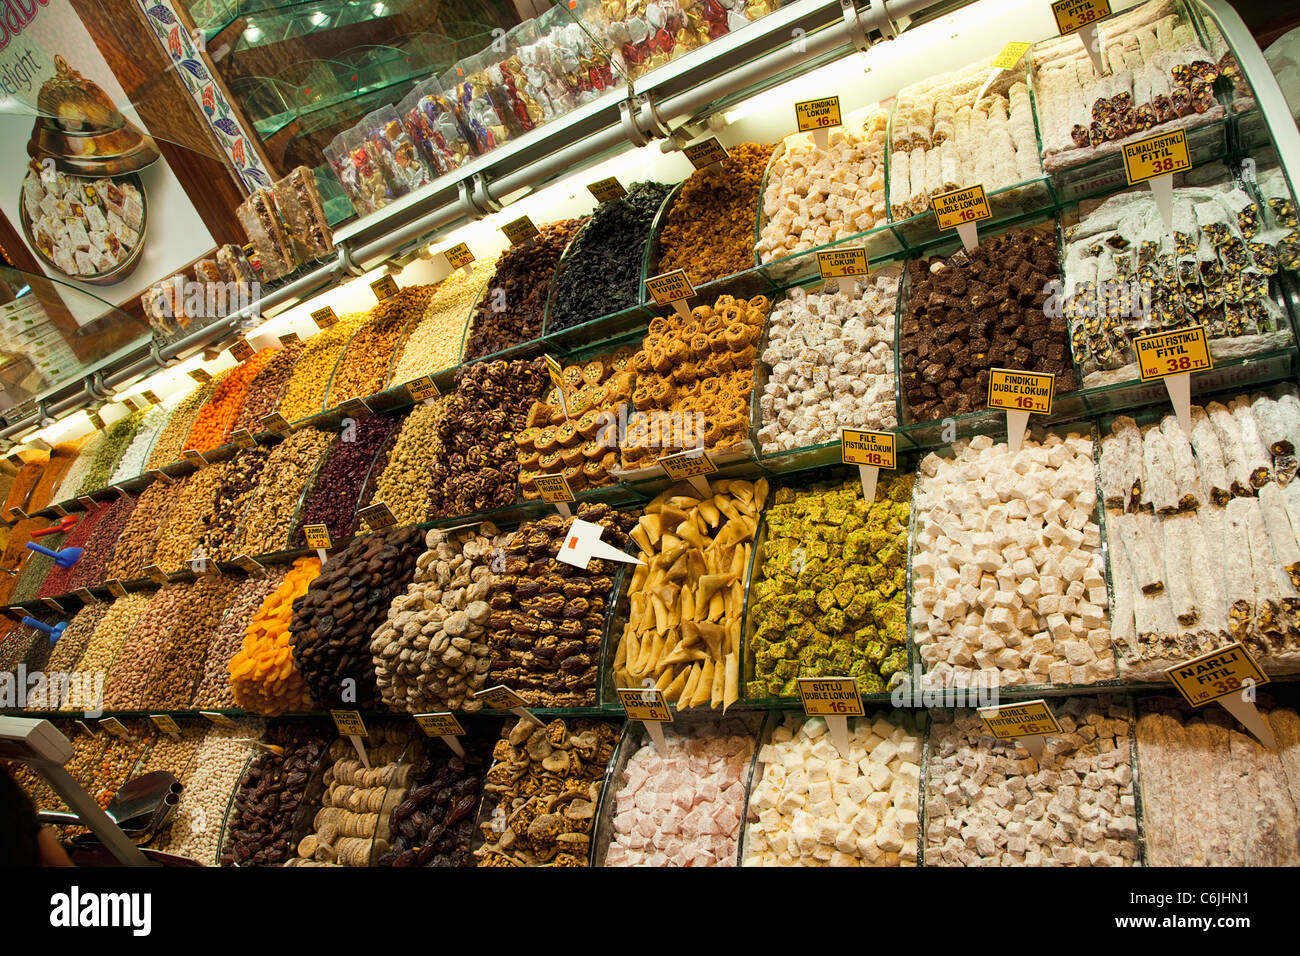 Türkei, Istanbul, Eminonu, Misir Carsisi, Spice Market Interieur. Stockfoto